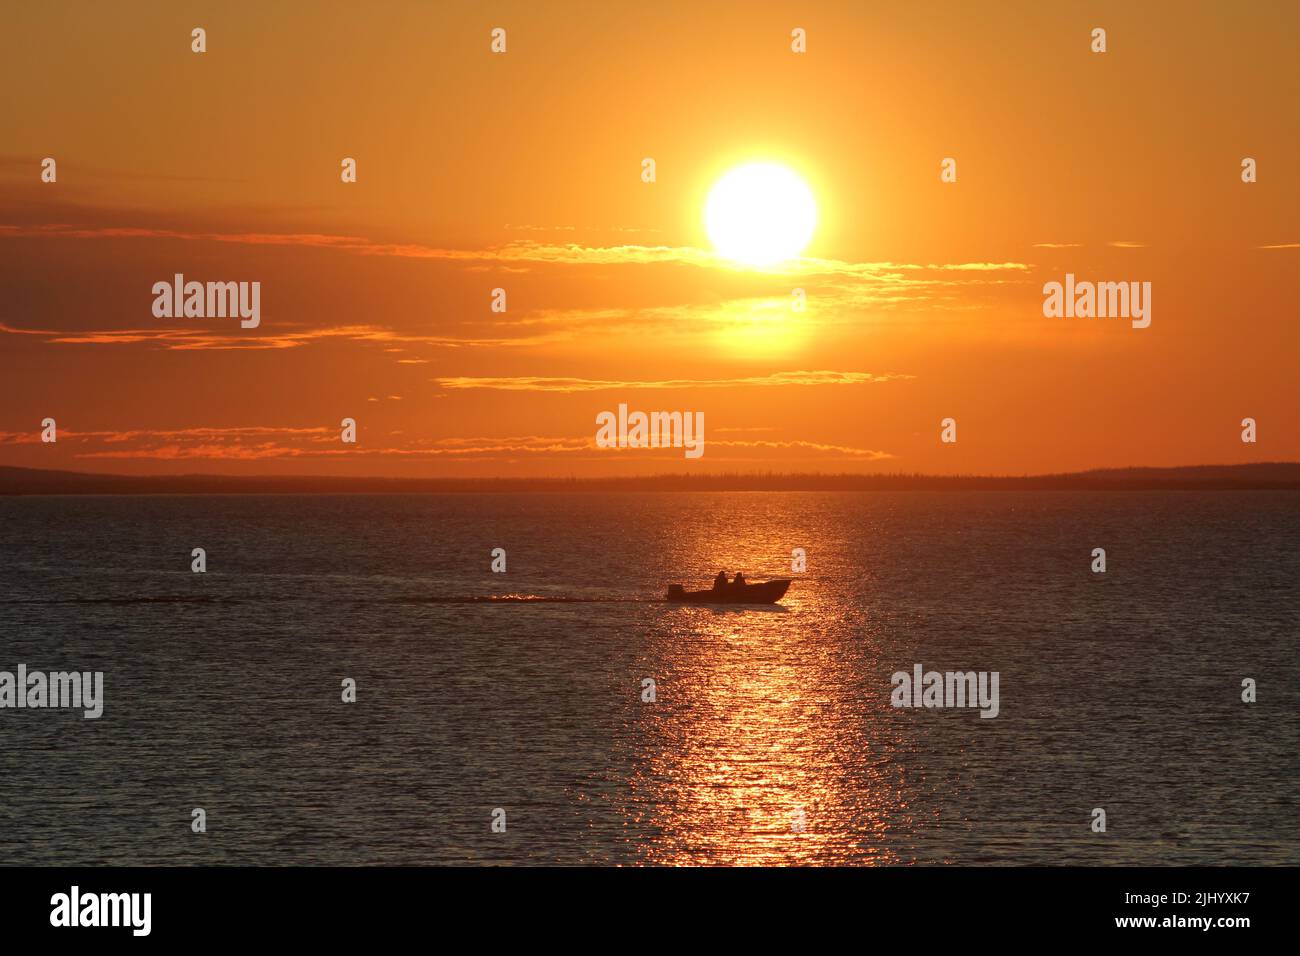 Midnight sun marathon hi-res stock photography and images - Alamy